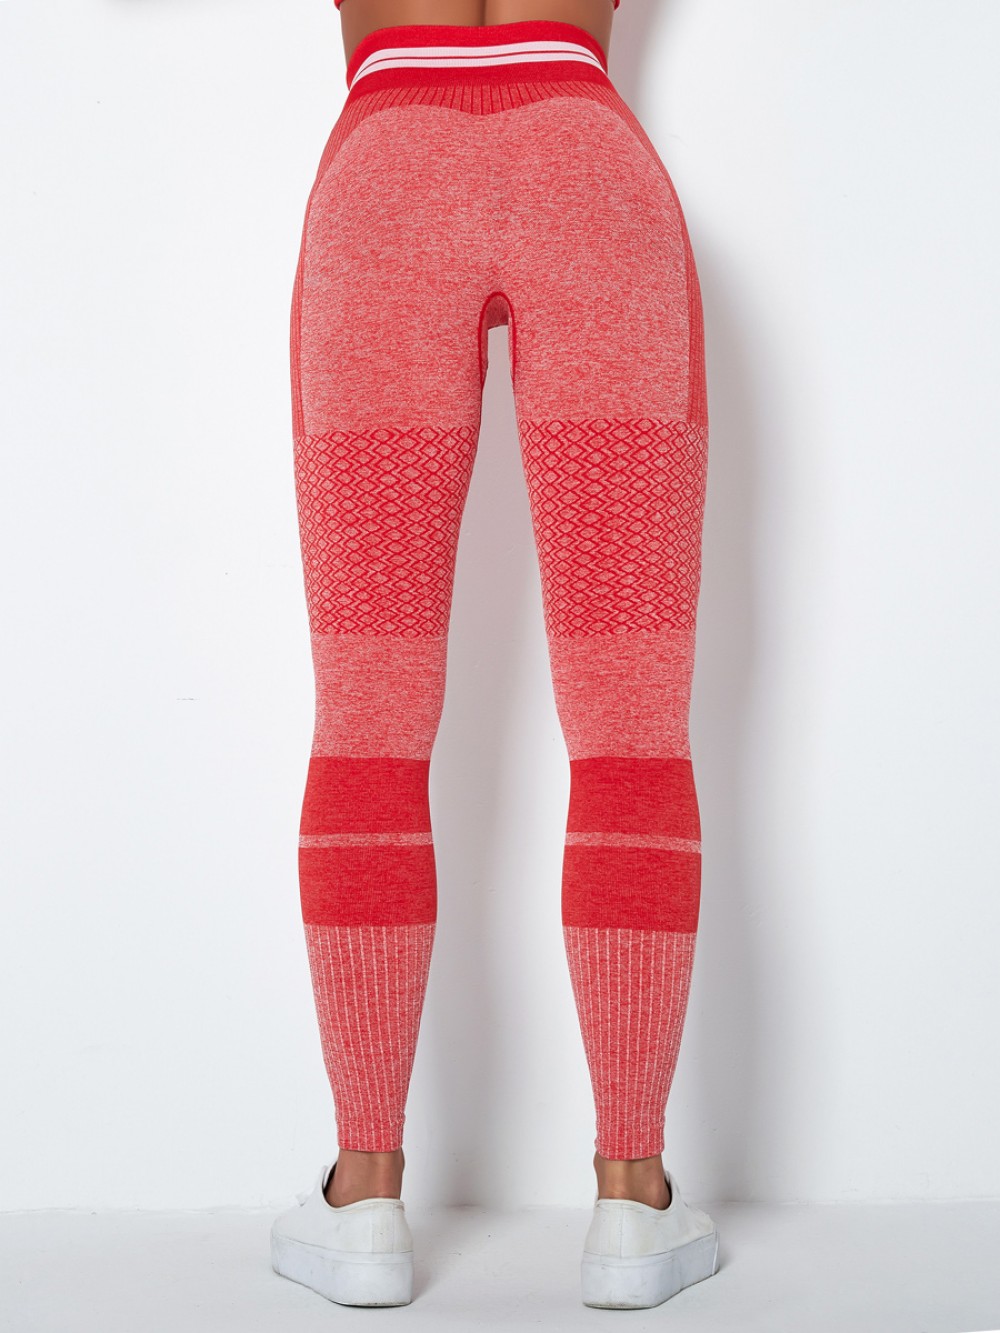 Premium Quality Red Ankle Length Knit Running Leggings Ladies Sportswear